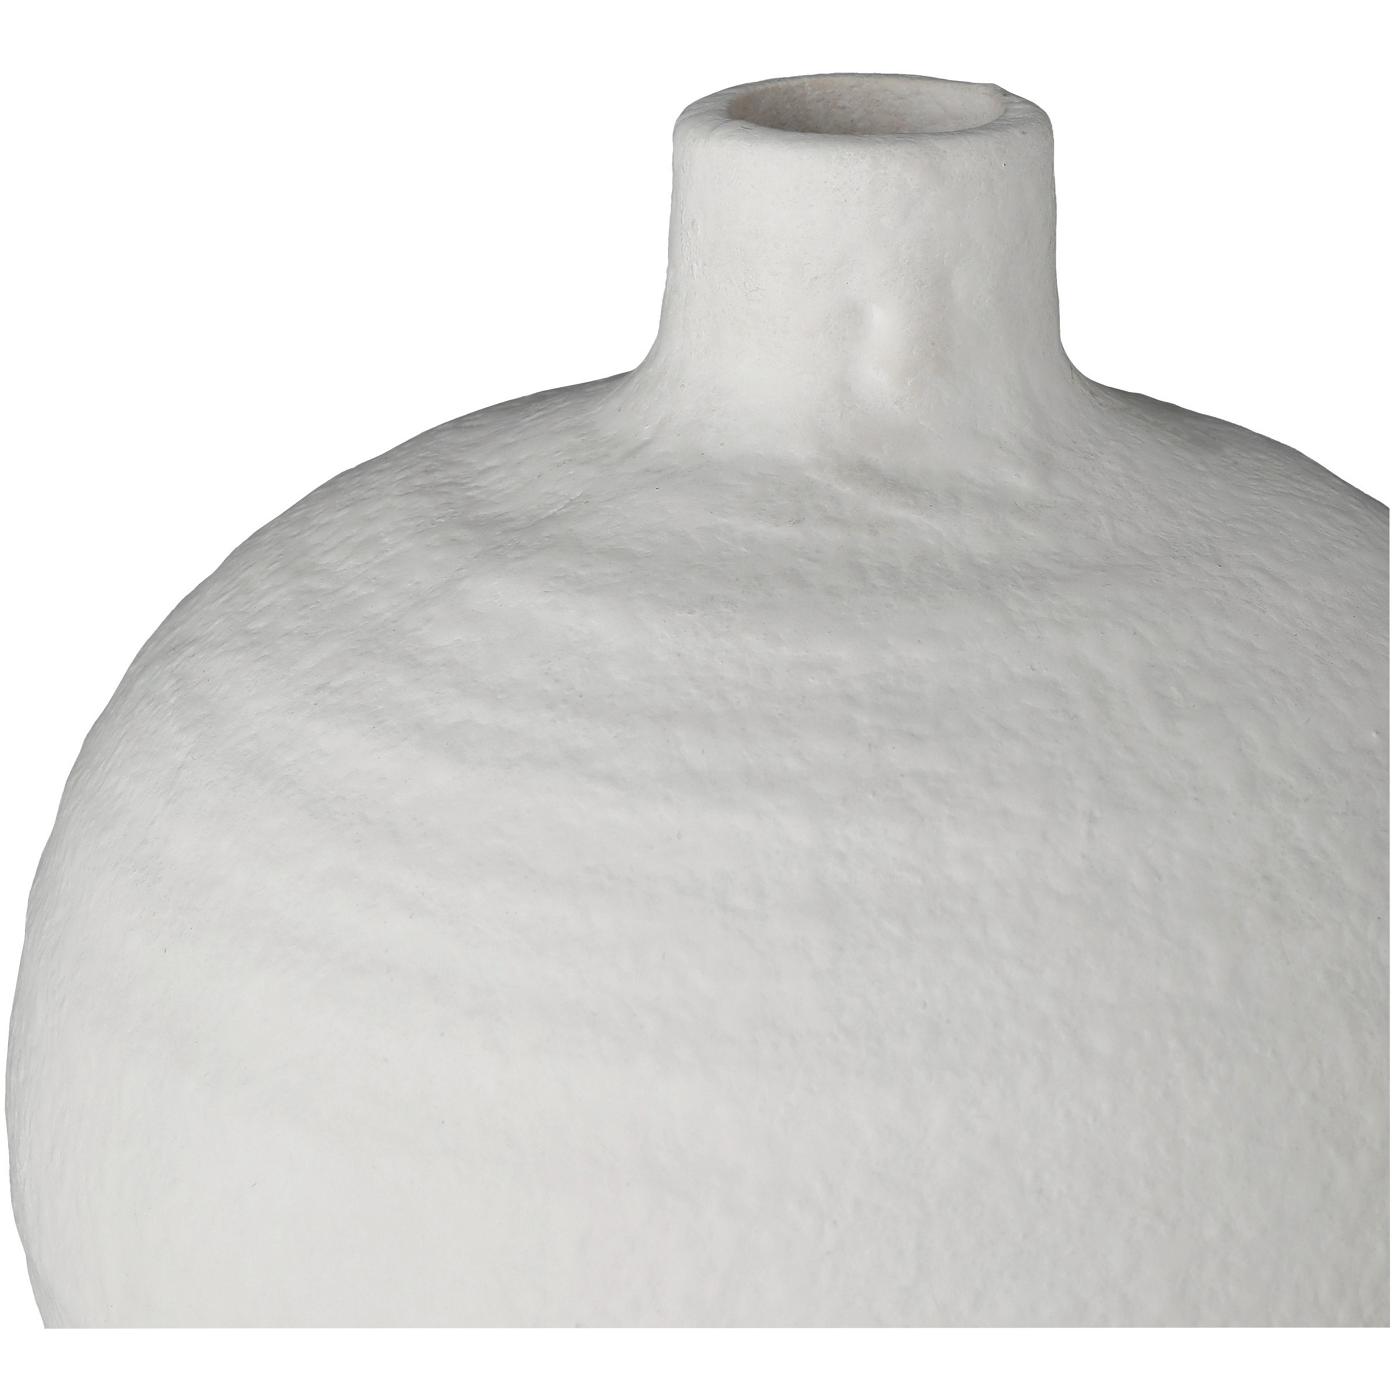 Haven + Key Round Decorative Ceramic Vase - White; image 2 of 2